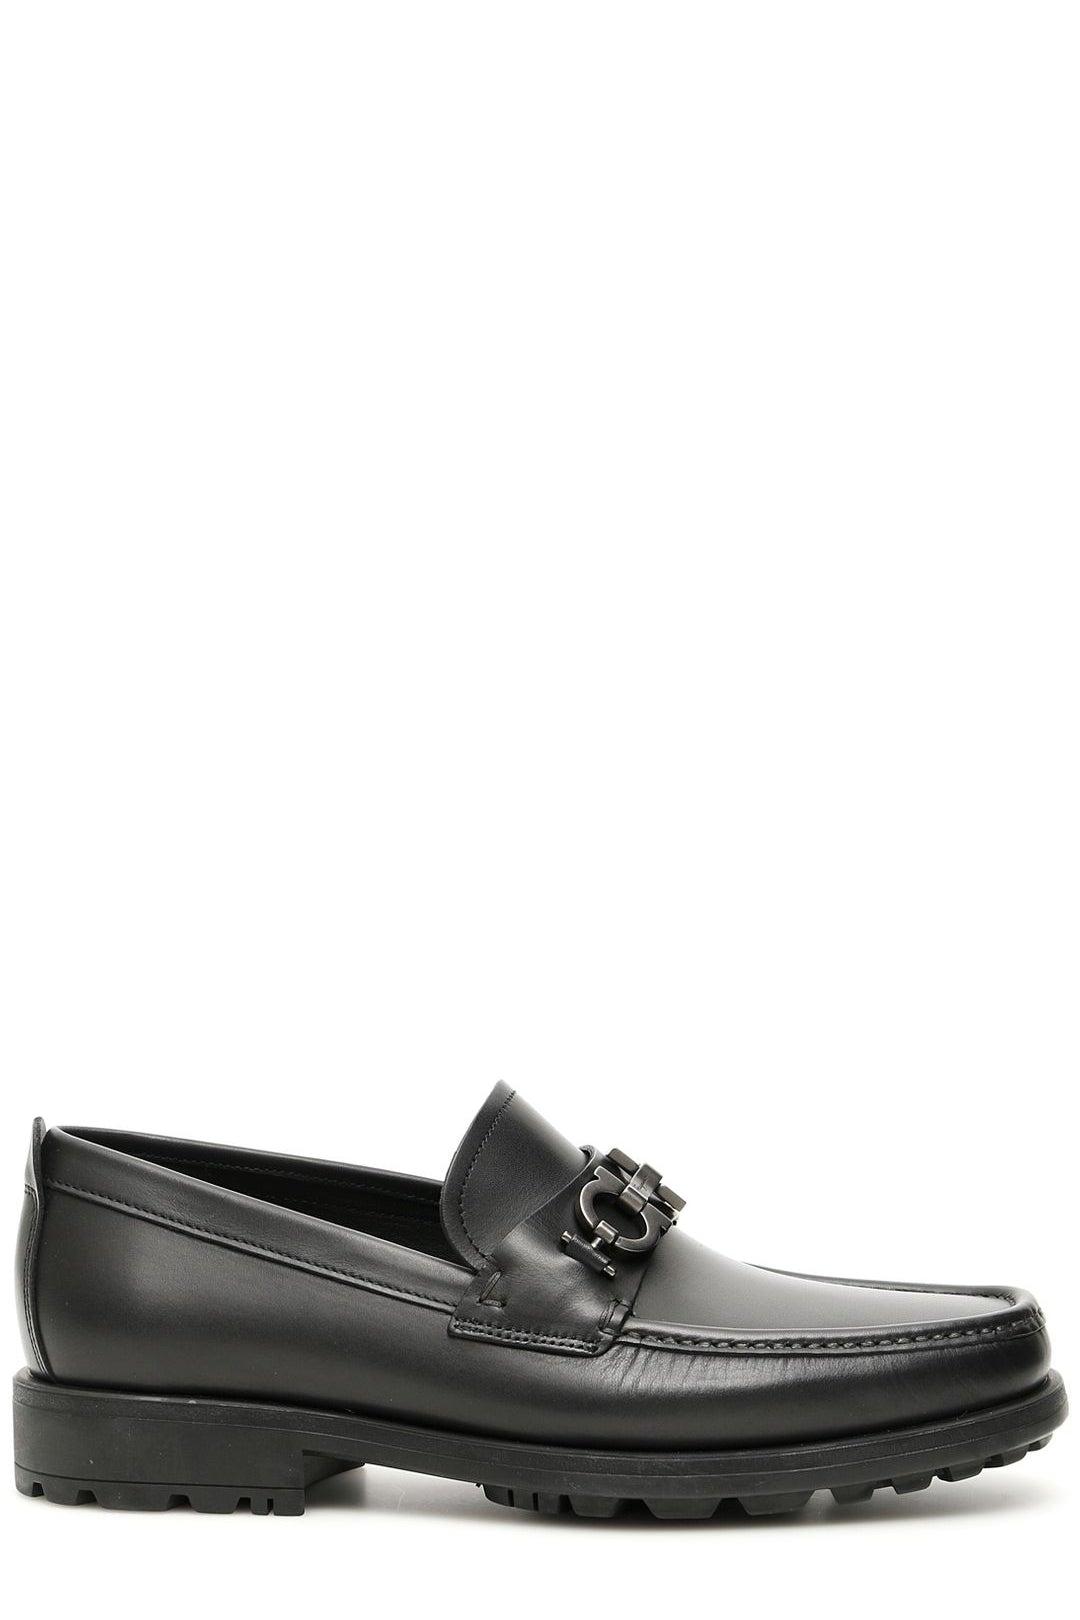 for Men Mens Slip-on shoes Ferragamo Slip-on shoes Save 9% Ferragamo Leather Gancini Loafers in Nero Taupe Dark Grey Black 